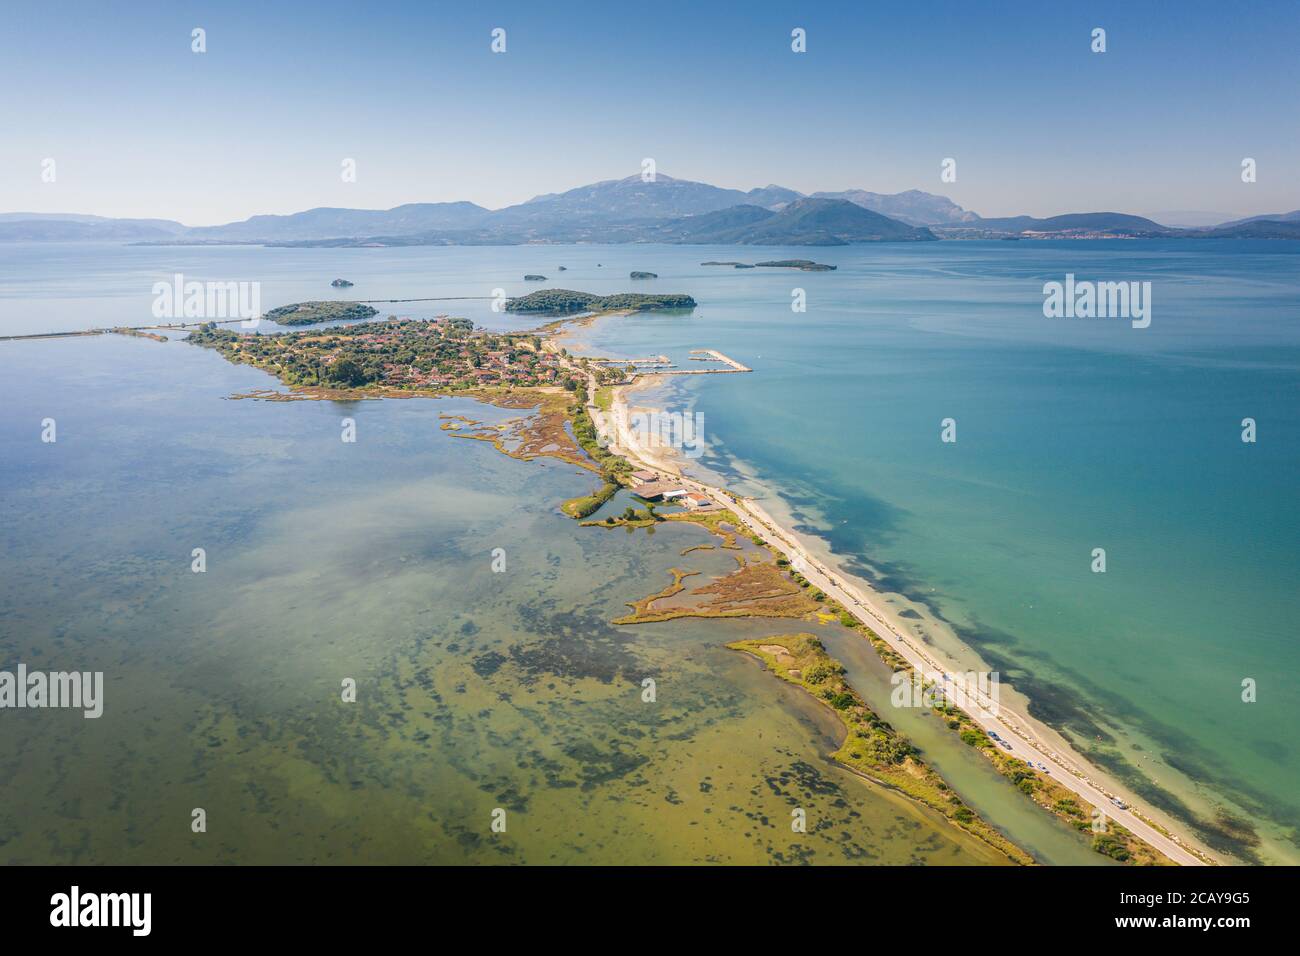 Town of Koronisia in the Ambracian Gulf (Gulf of Arta or the Gulf of Actium), Greece Stock Photo